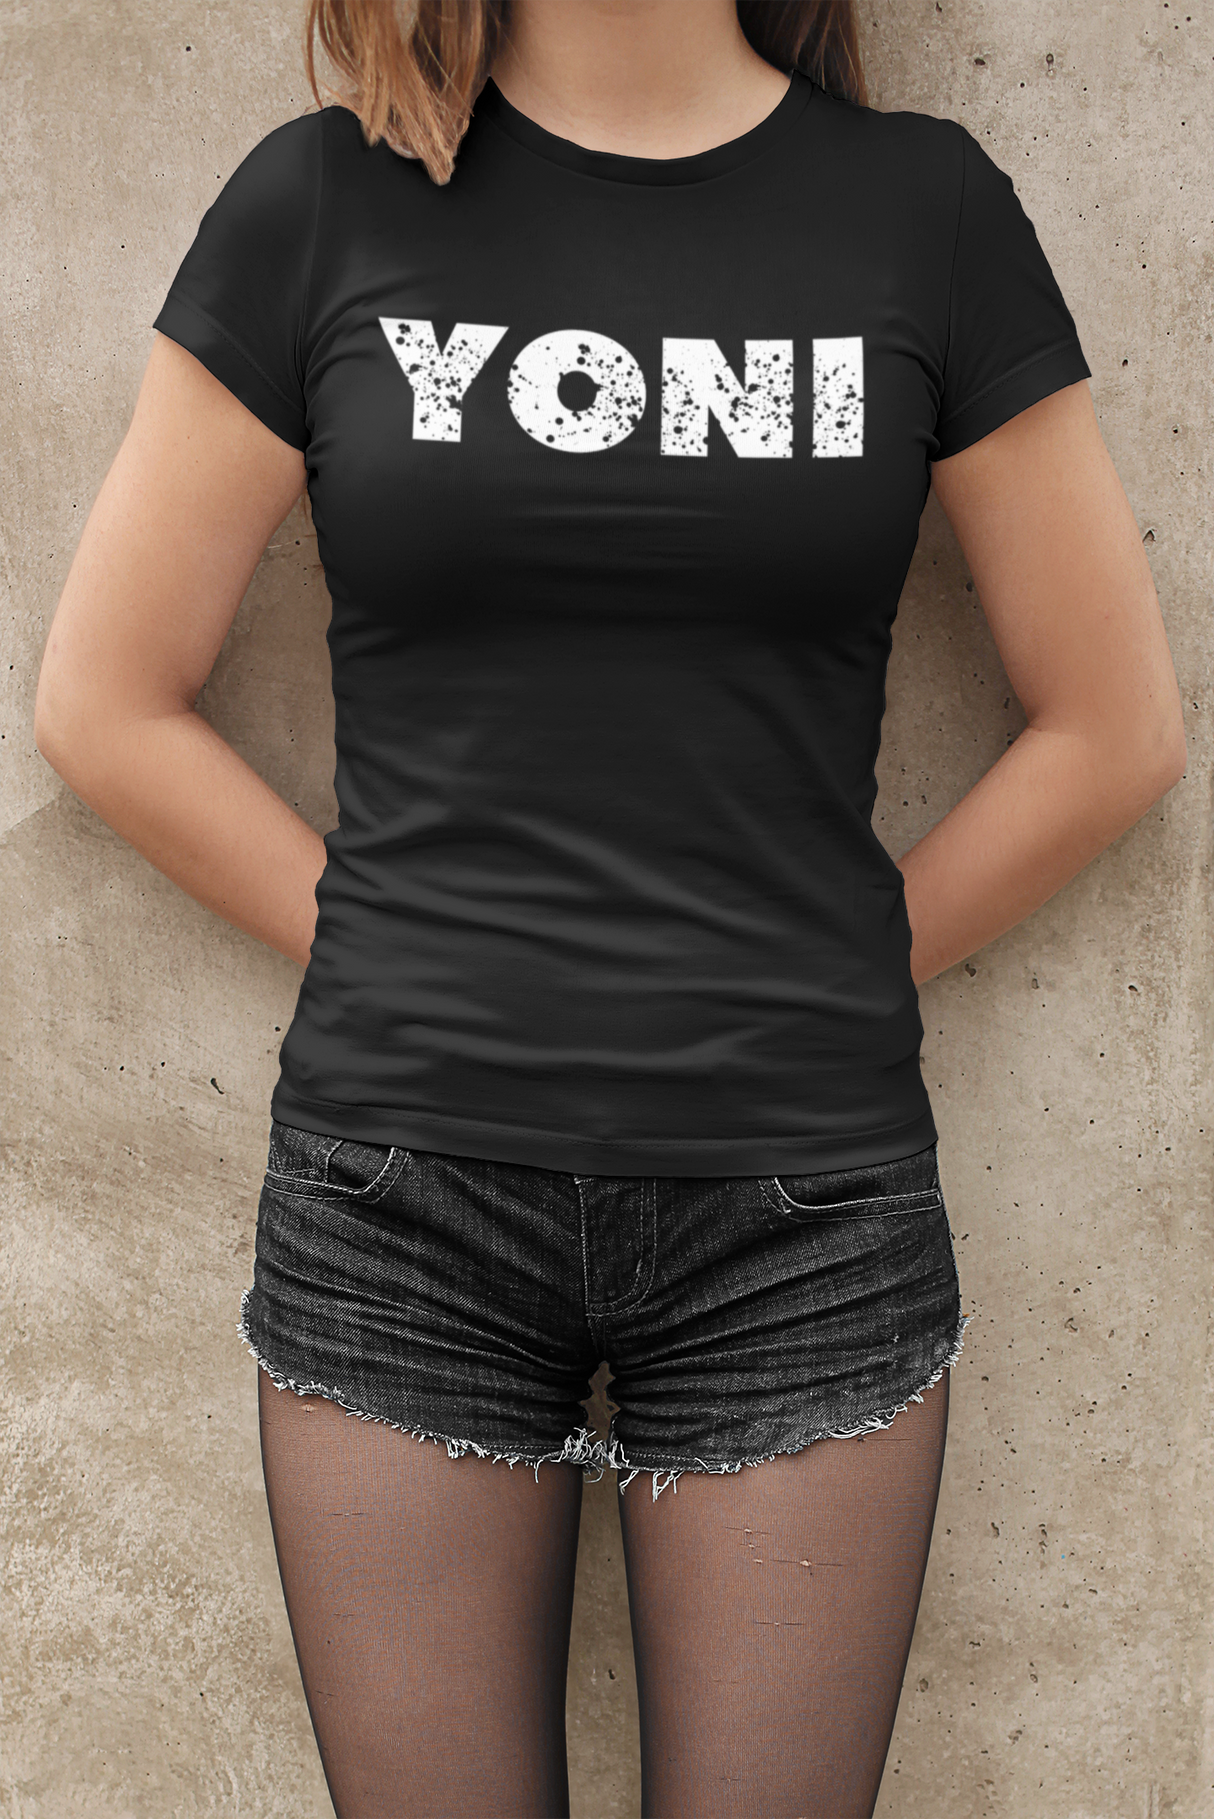 Yoni 2 T-Shirt - Shop Sassy Chick 